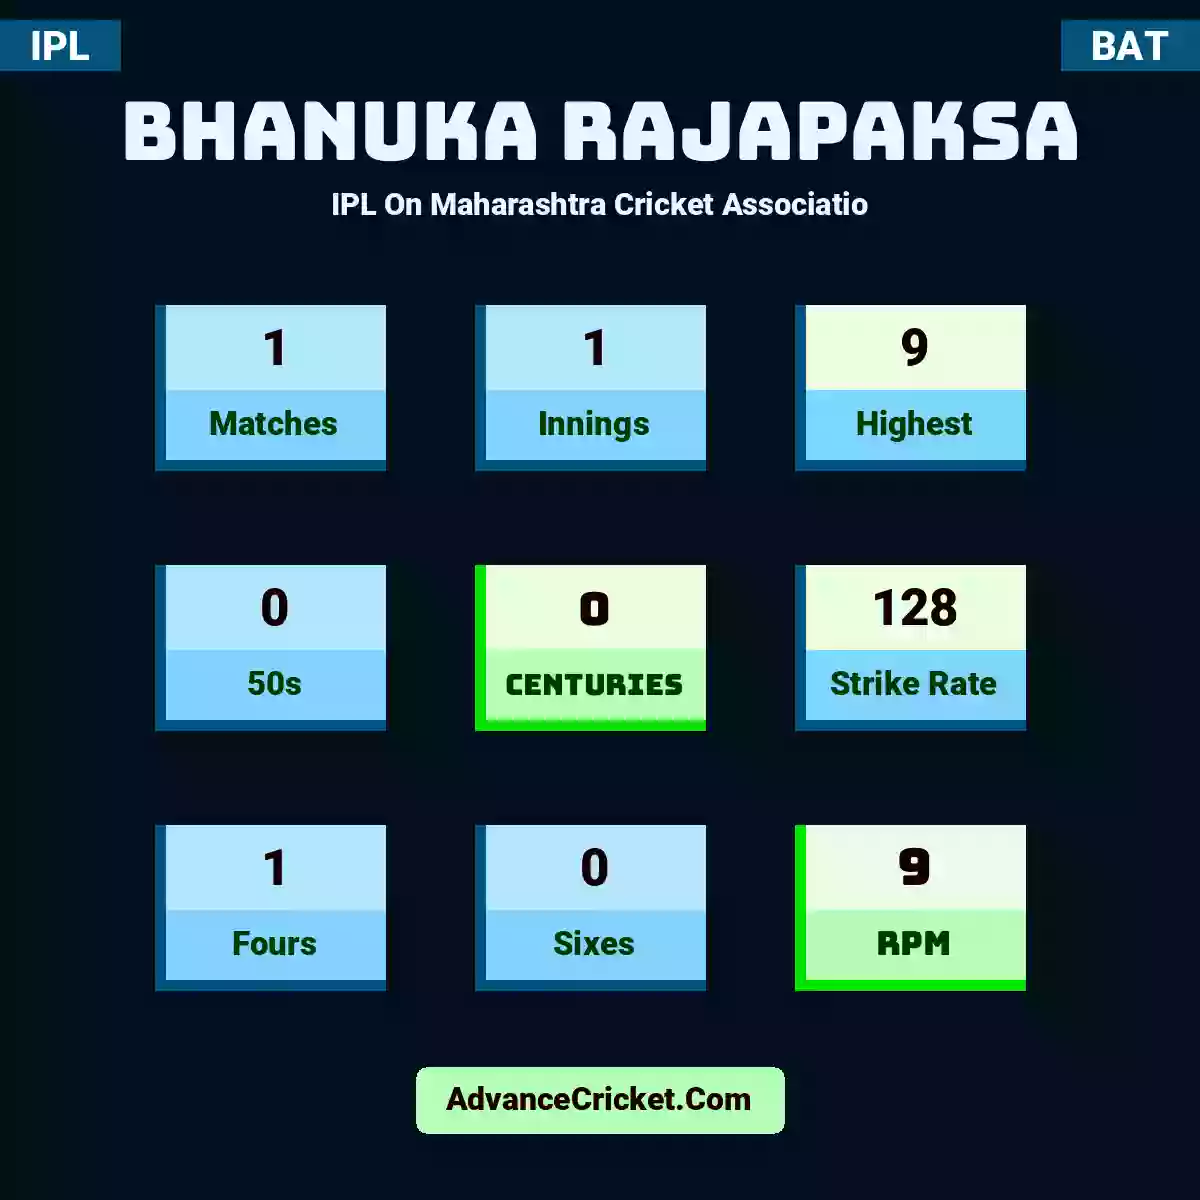 Bhanuka Rajapaksa IPL  On Maharashtra Cricket Associatio, Bhanuka Rajapaksa played 1 matches, scored 9 runs as highest, 0 half-centuries, and 0 centuries, with a strike rate of 128. B.Rajapaksa hit 1 fours and 0 sixes, with an RPM of 9.